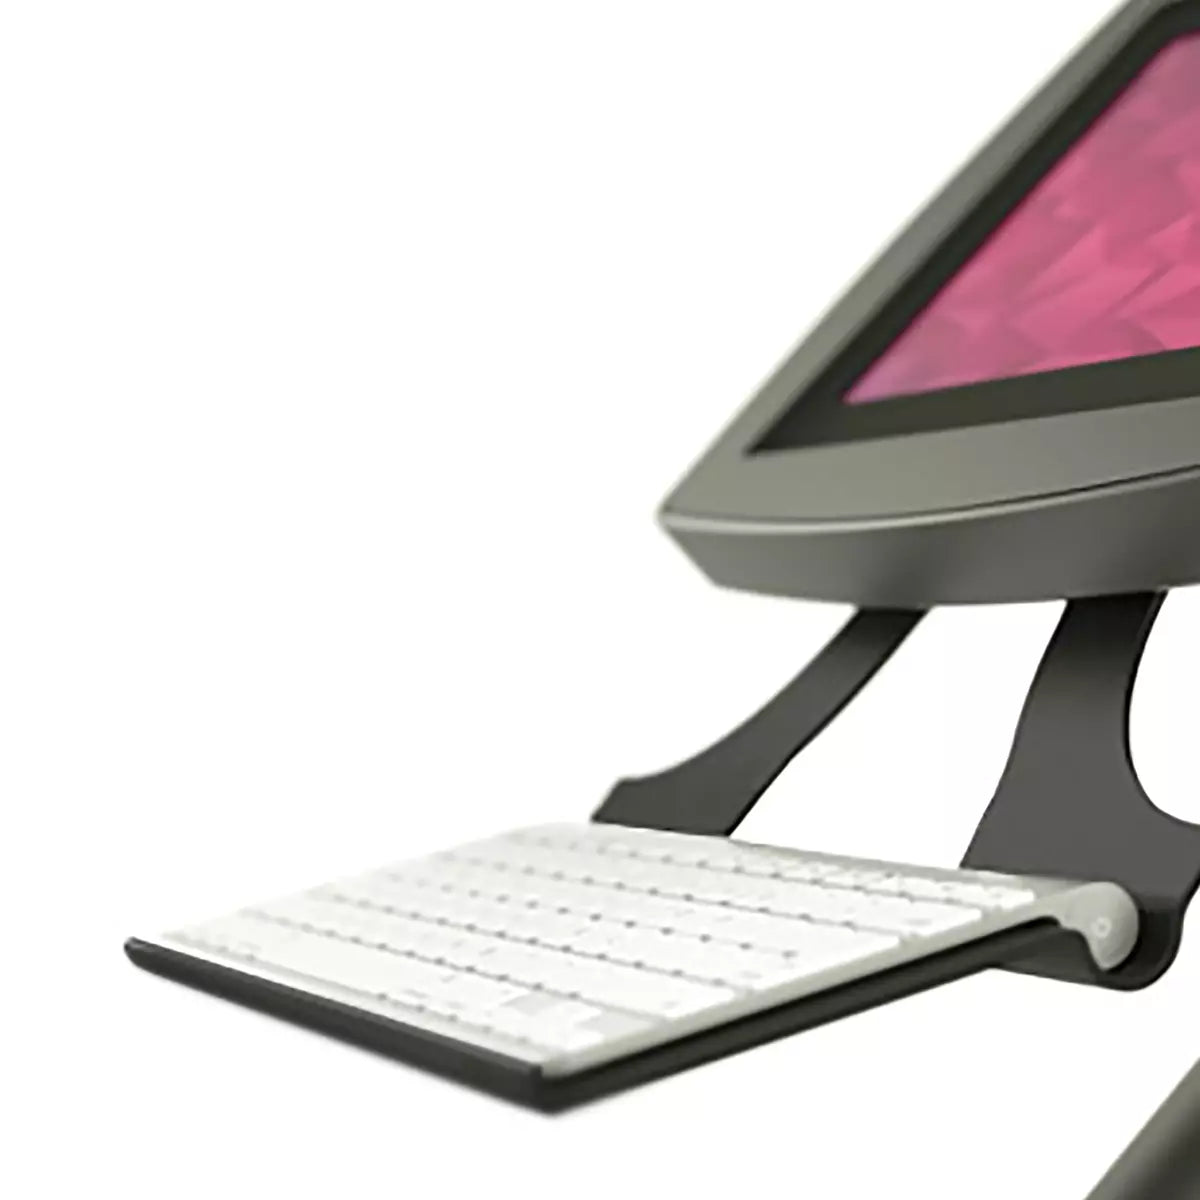 Keyboard Tray made of aluminum hardware adaptable for any portable keyboard.